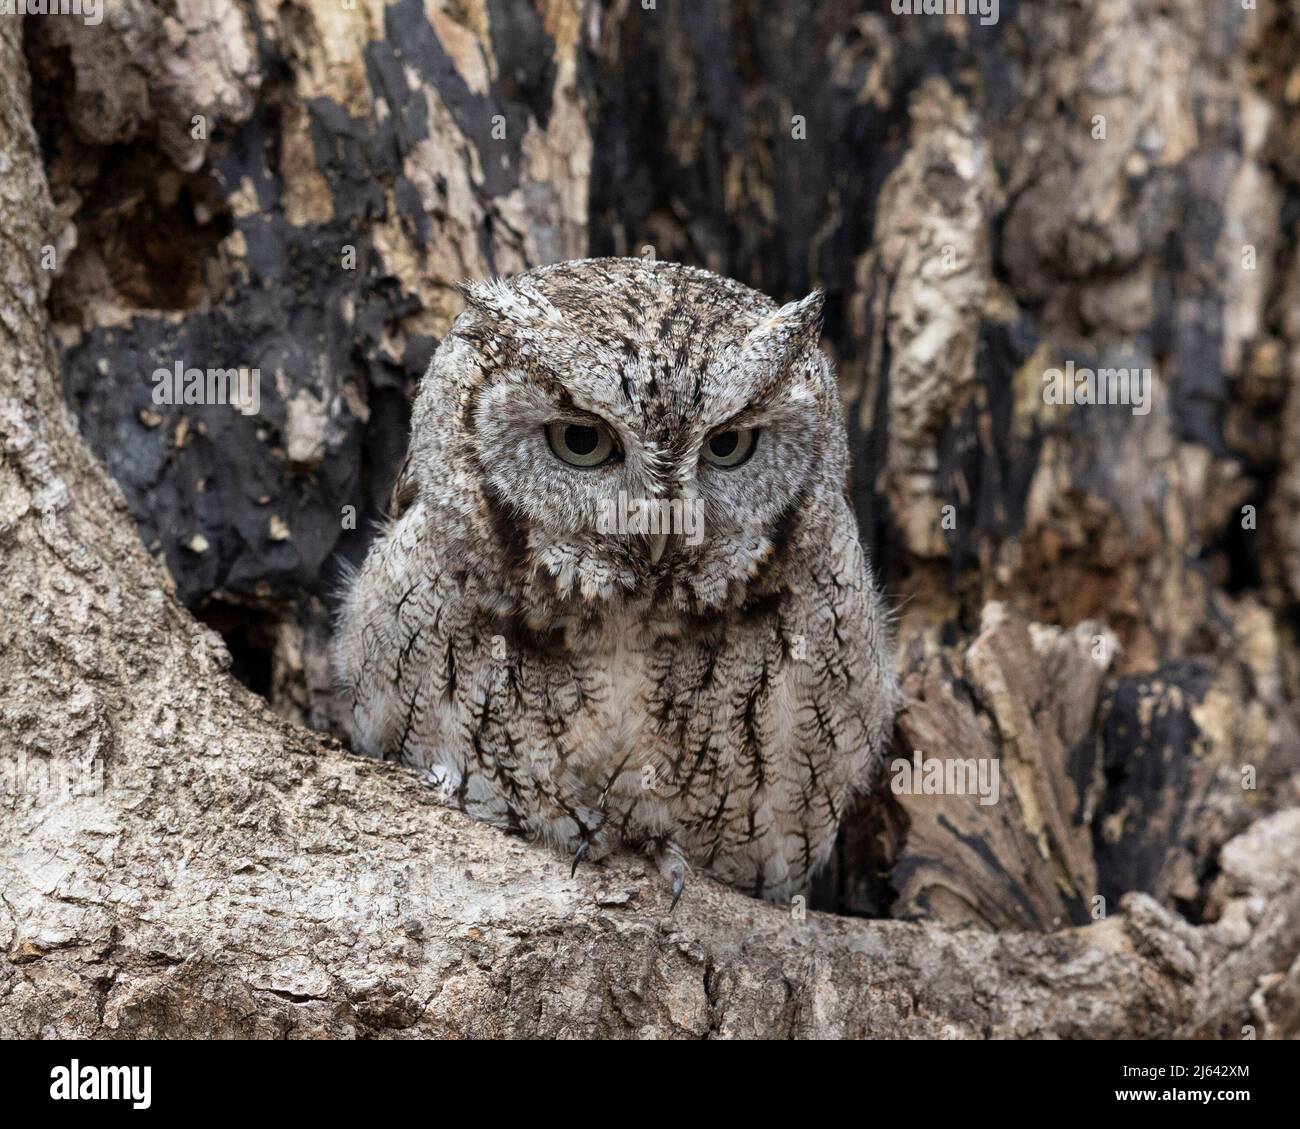 An eastern screech owl resting in a tree Stock Photo